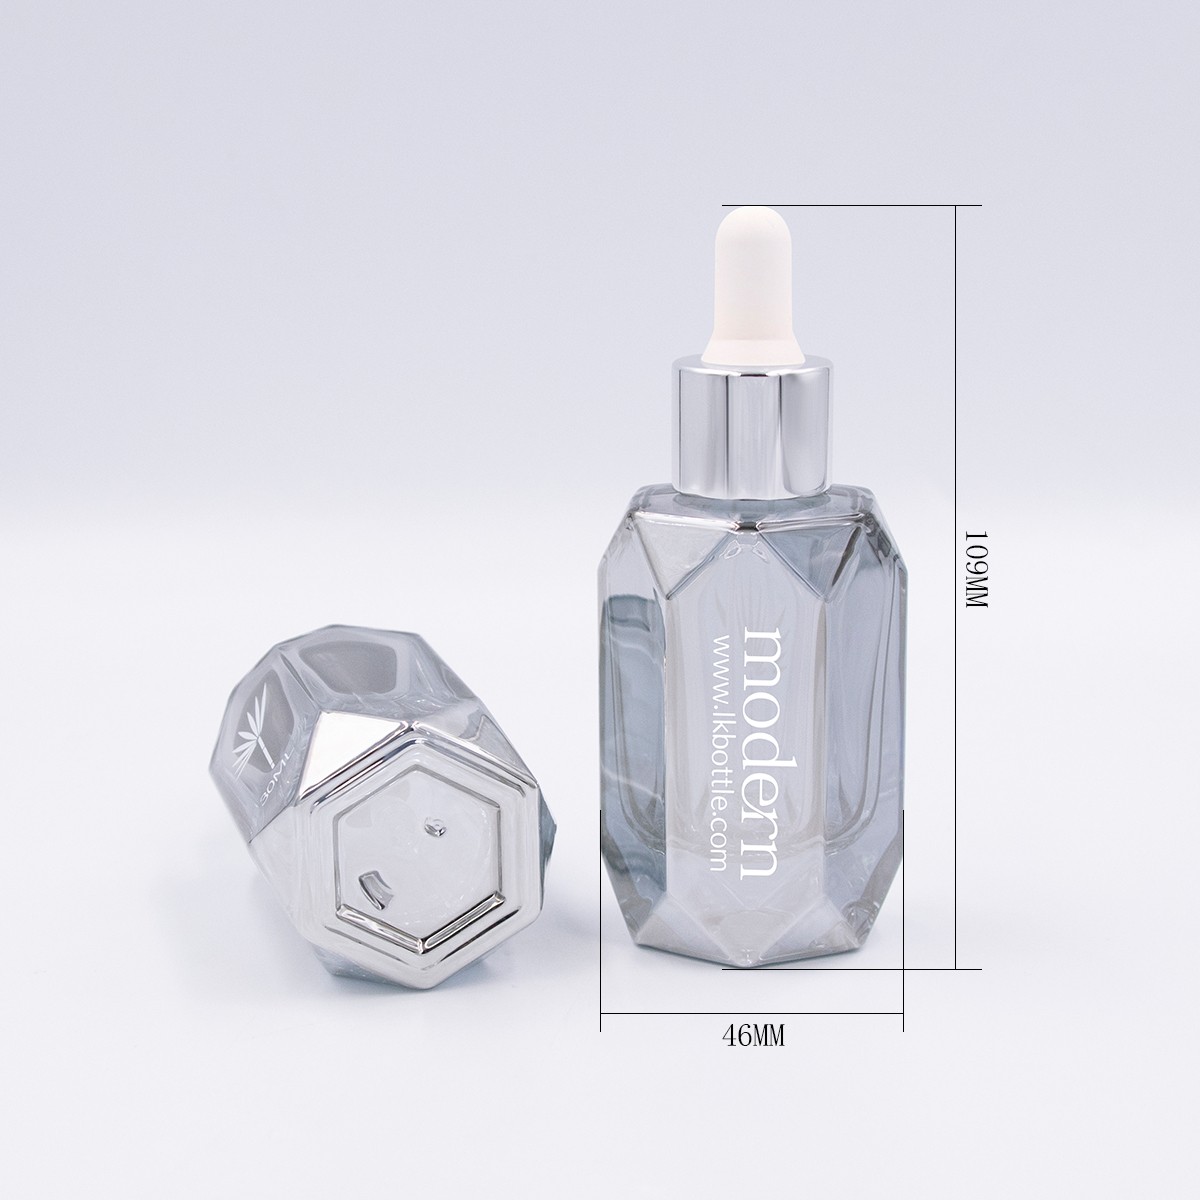 30ml diamond corner bottle